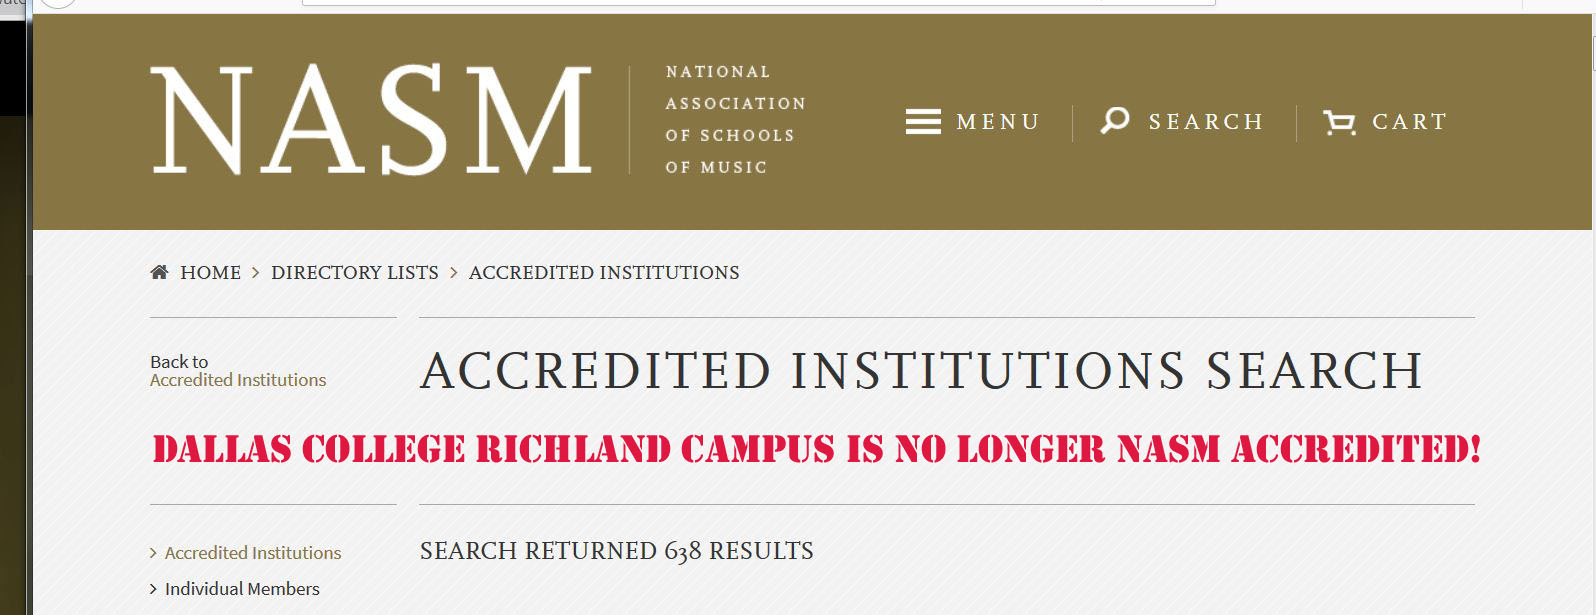 Dallas College Richland Campus NOT NASM Accredited